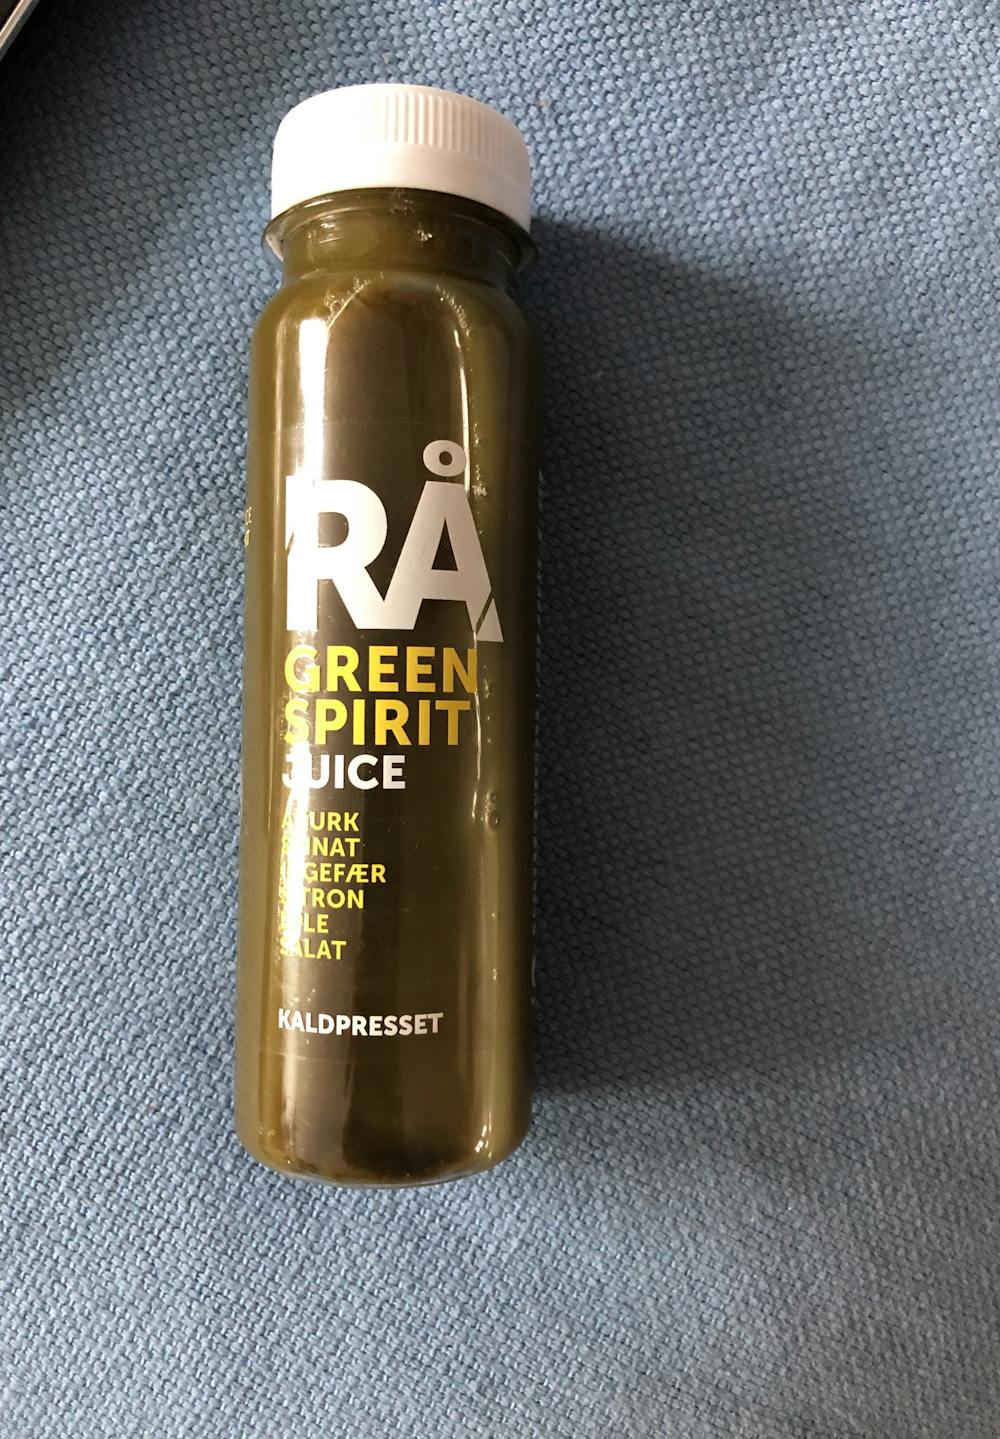 Green spirit juice, Rå